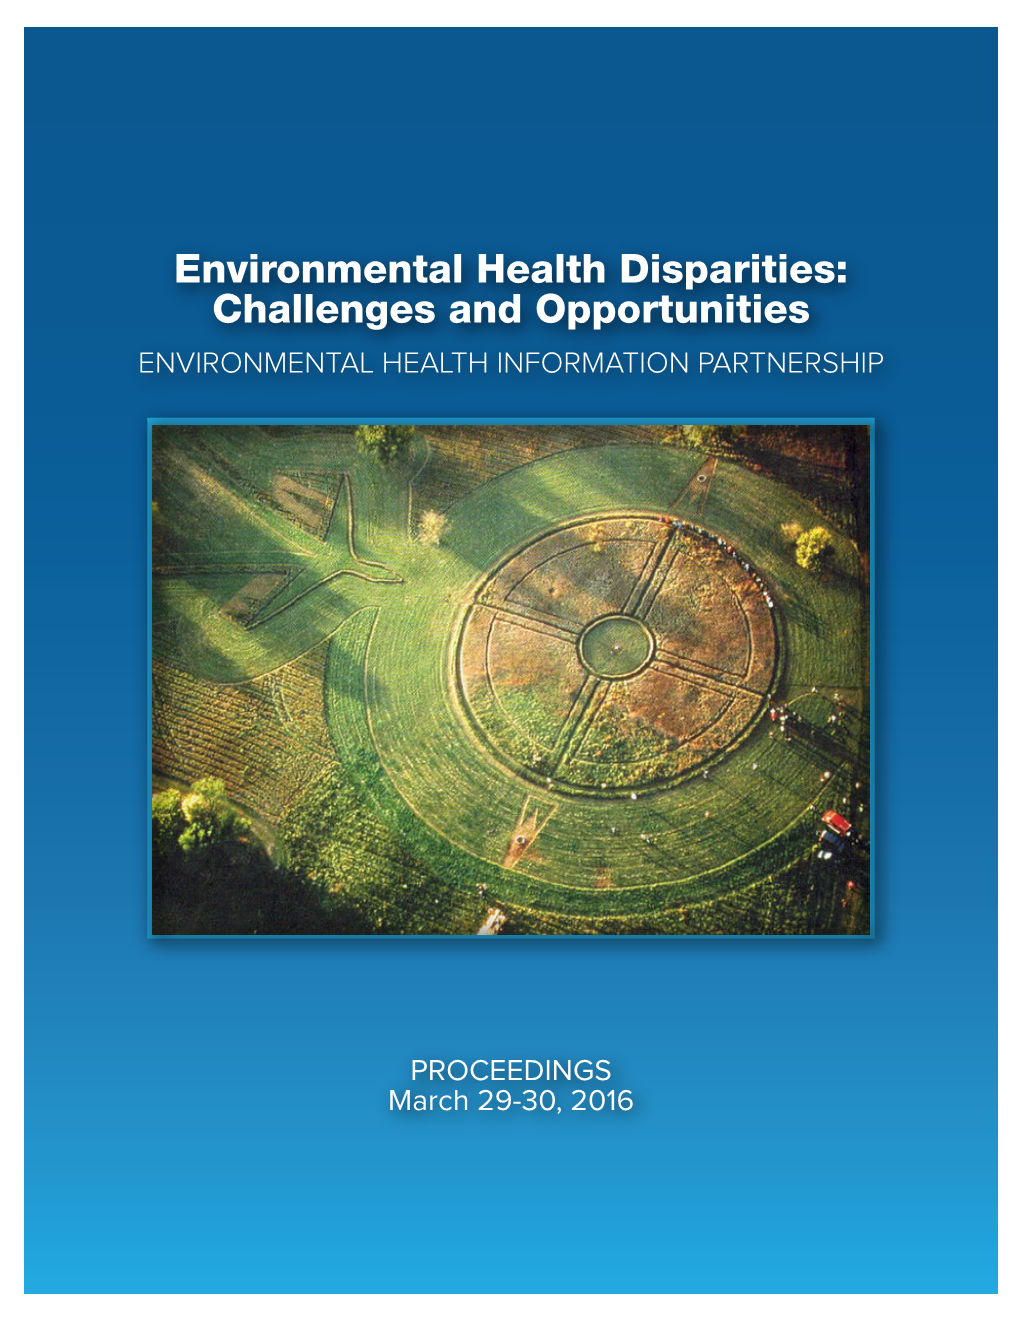 Environmental Health Information Partnership Proceedings, March 29